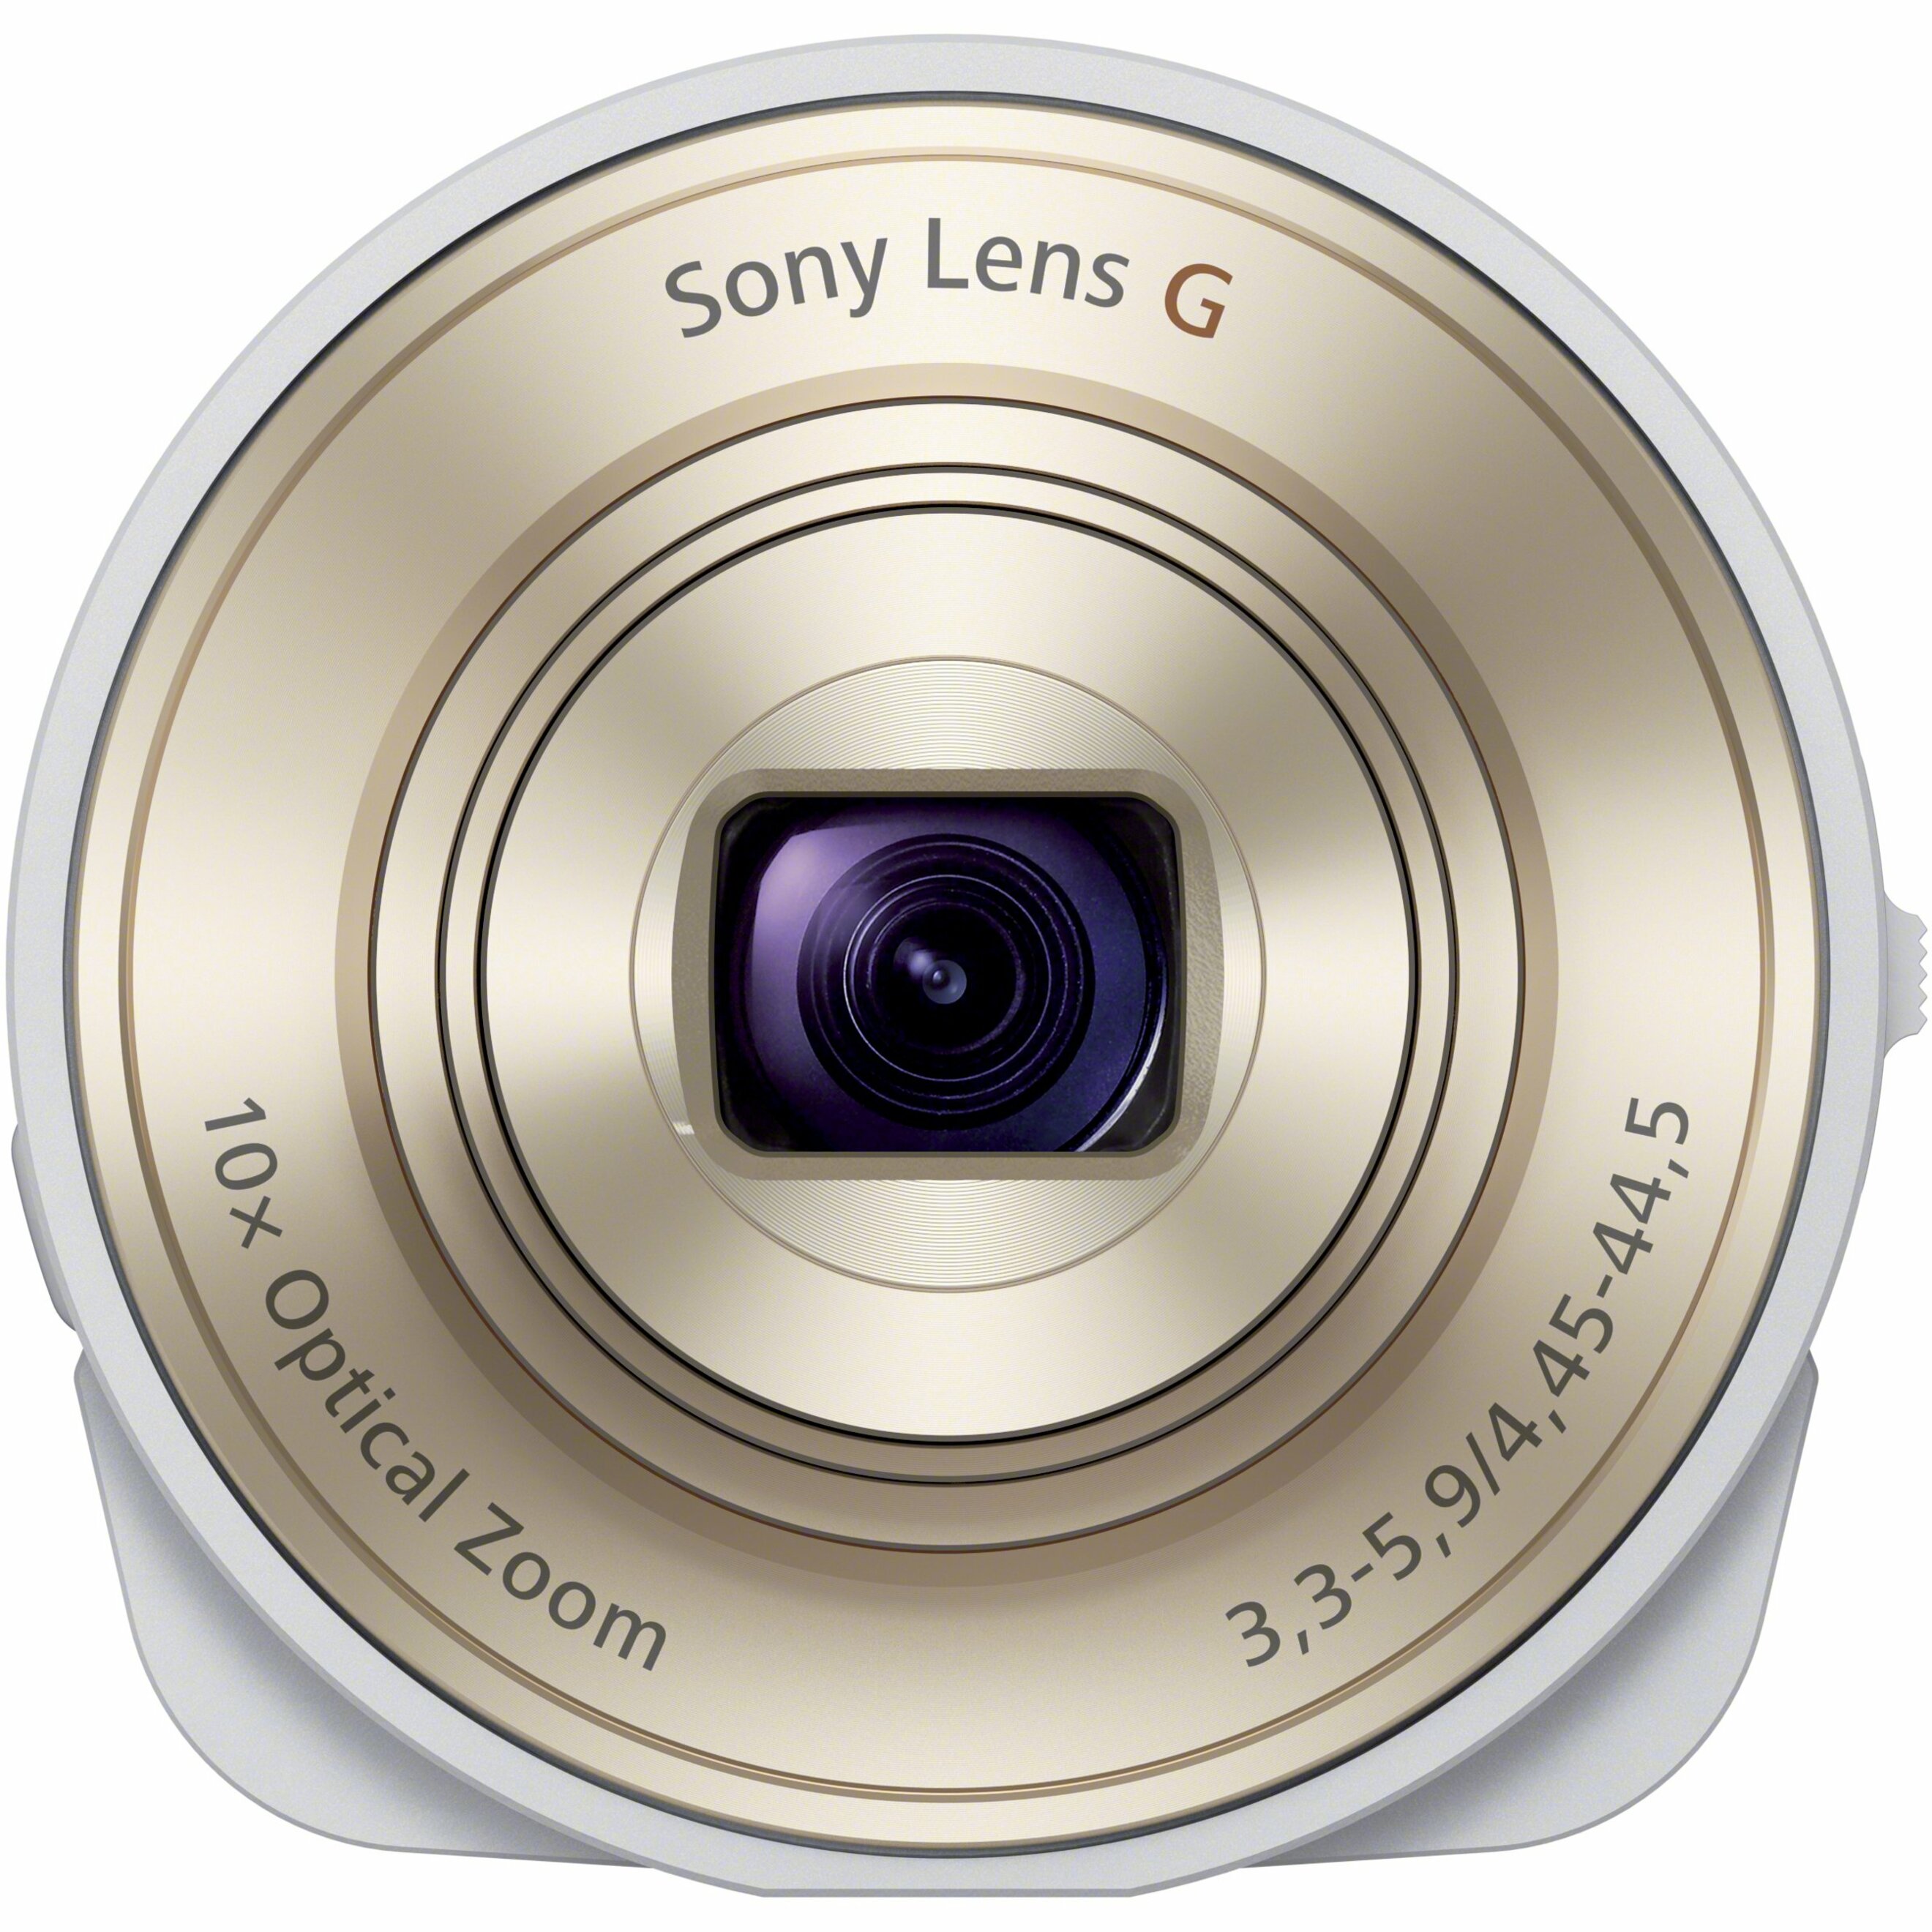 Sony DSC-QX10 Lens Style Camera - image 1 of 8